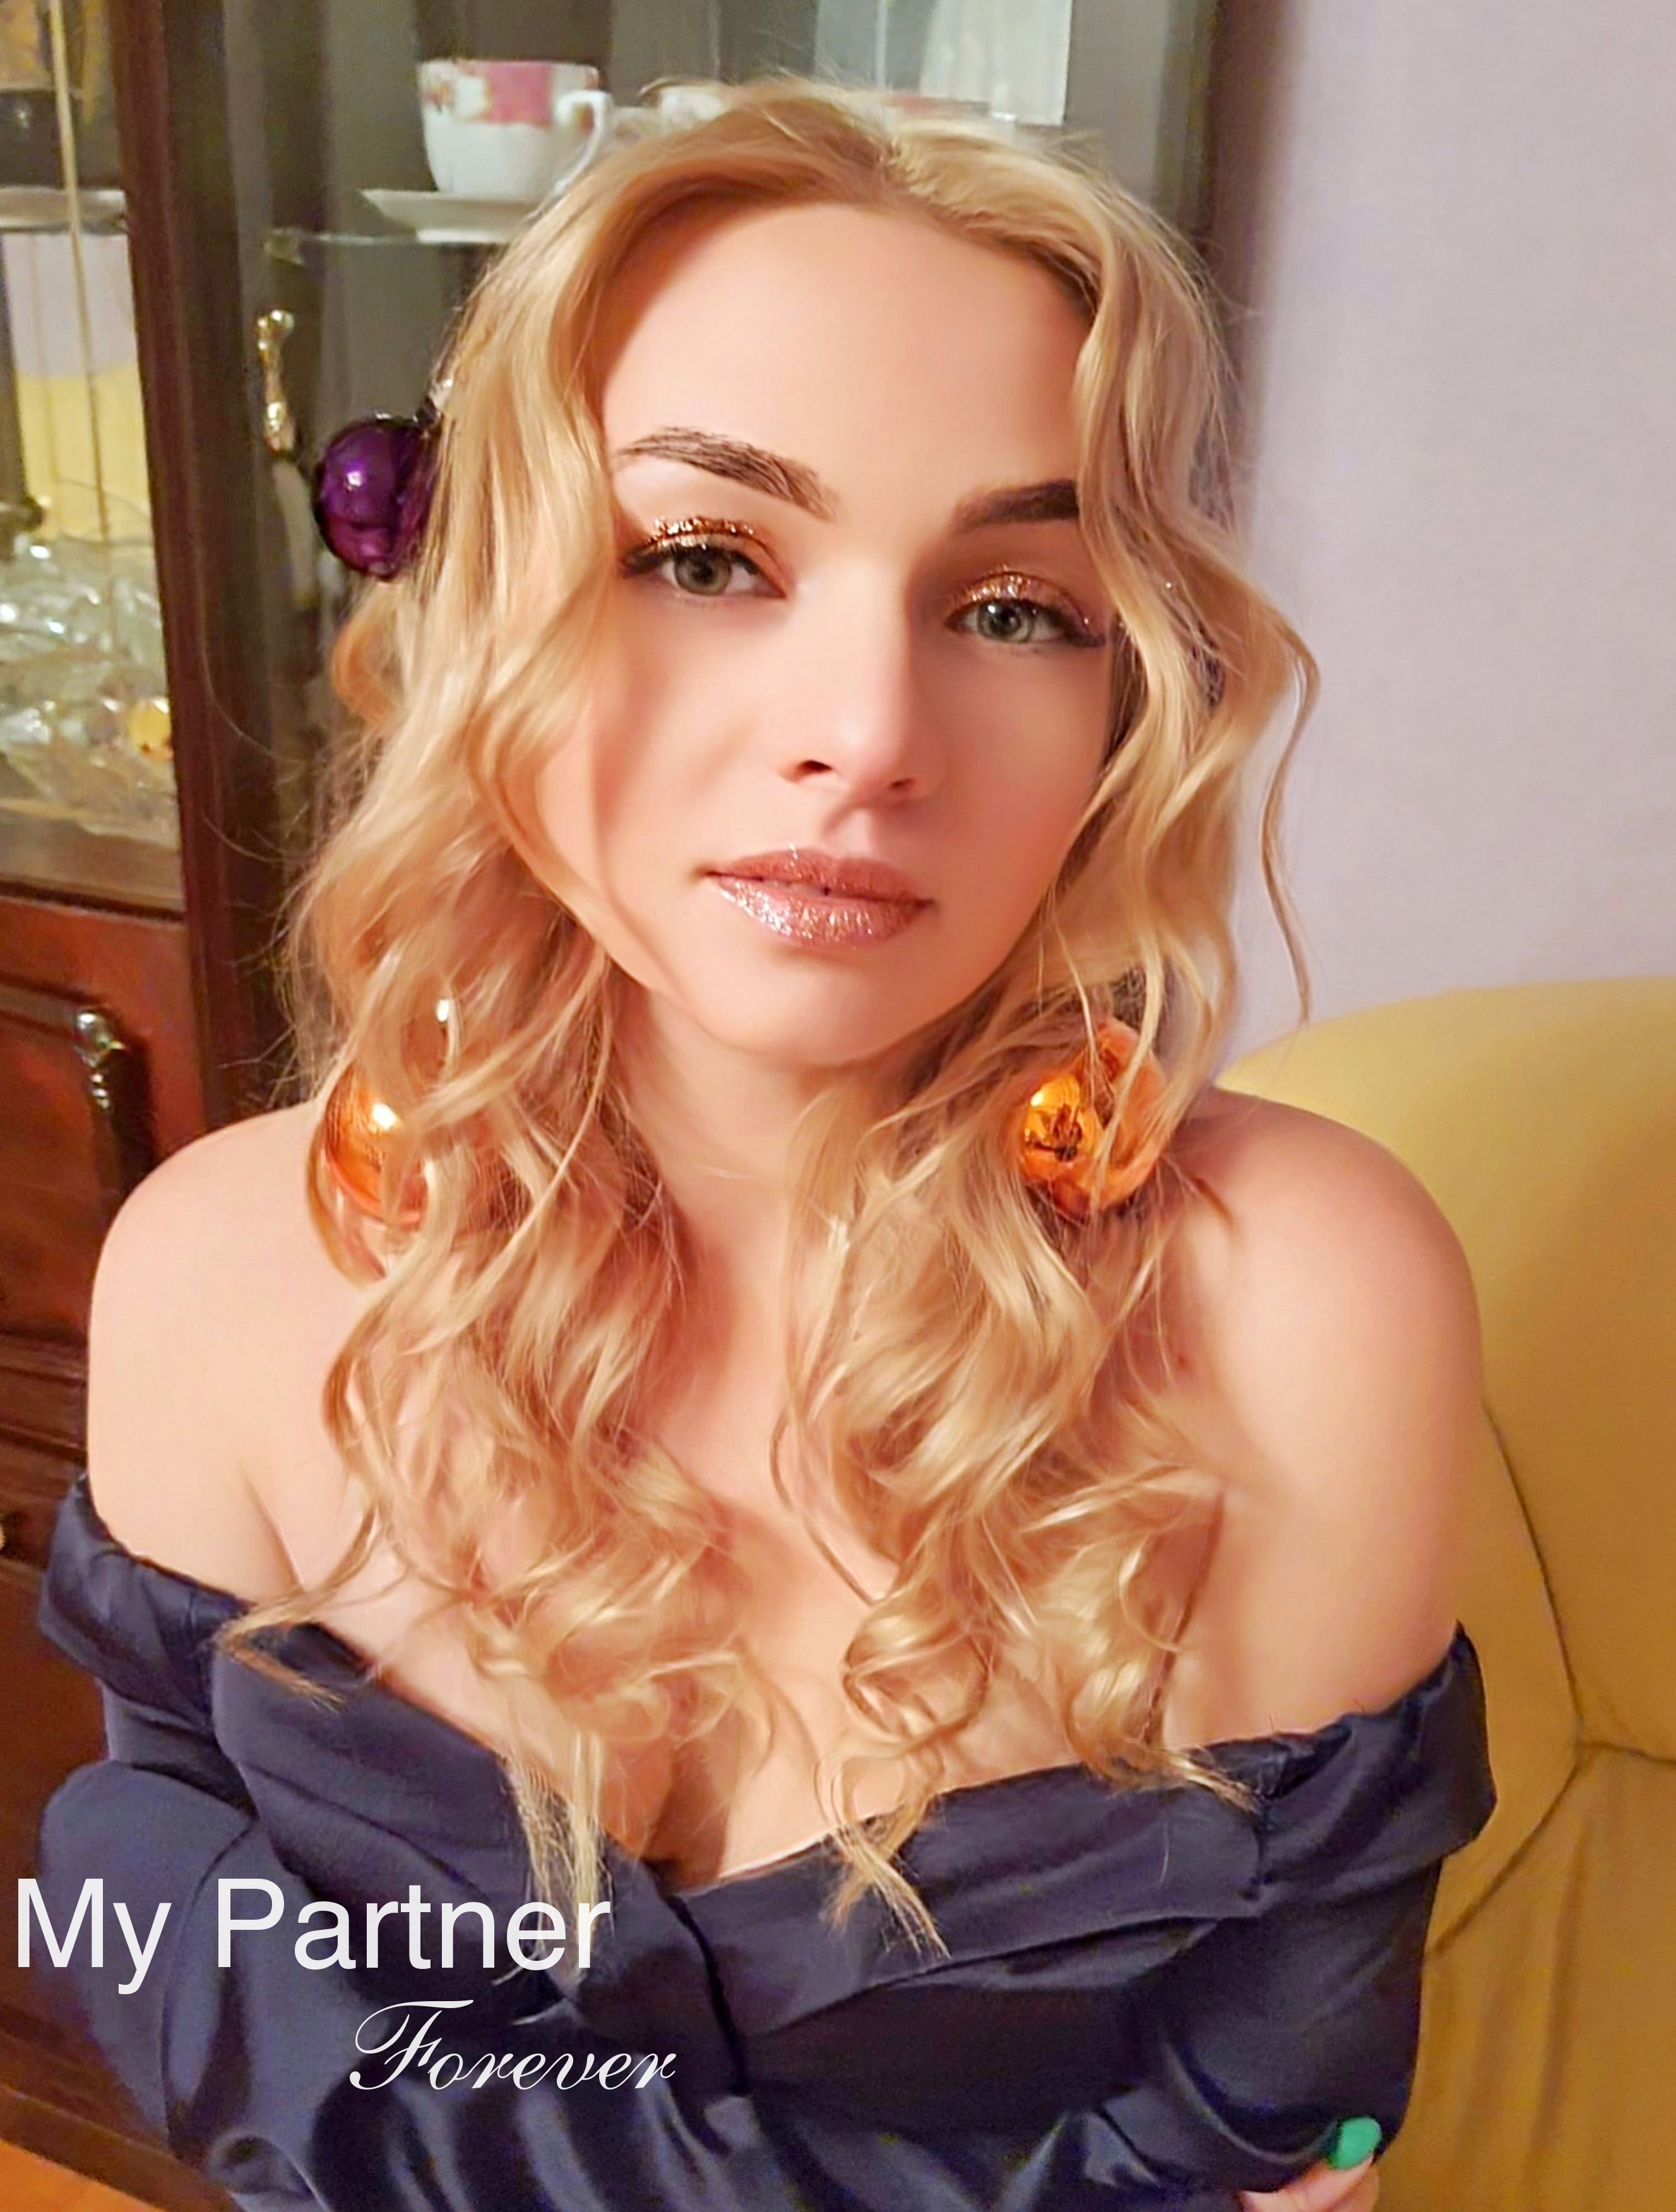 Datingsite to Meet Anna from Uman, Ukraine